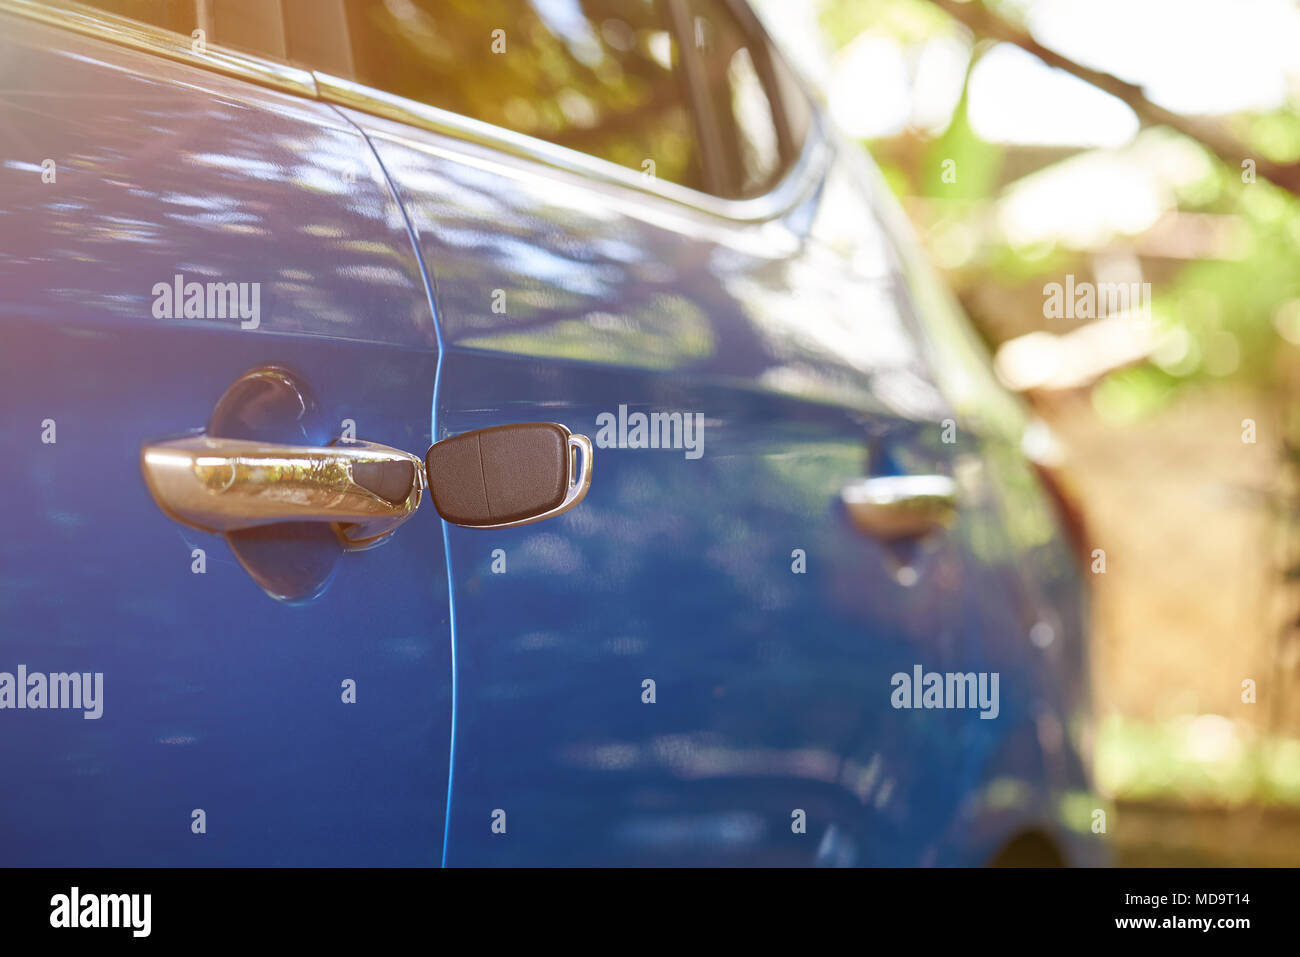 Unlocking vehicle door theme. Key left in car lock Stock Photo